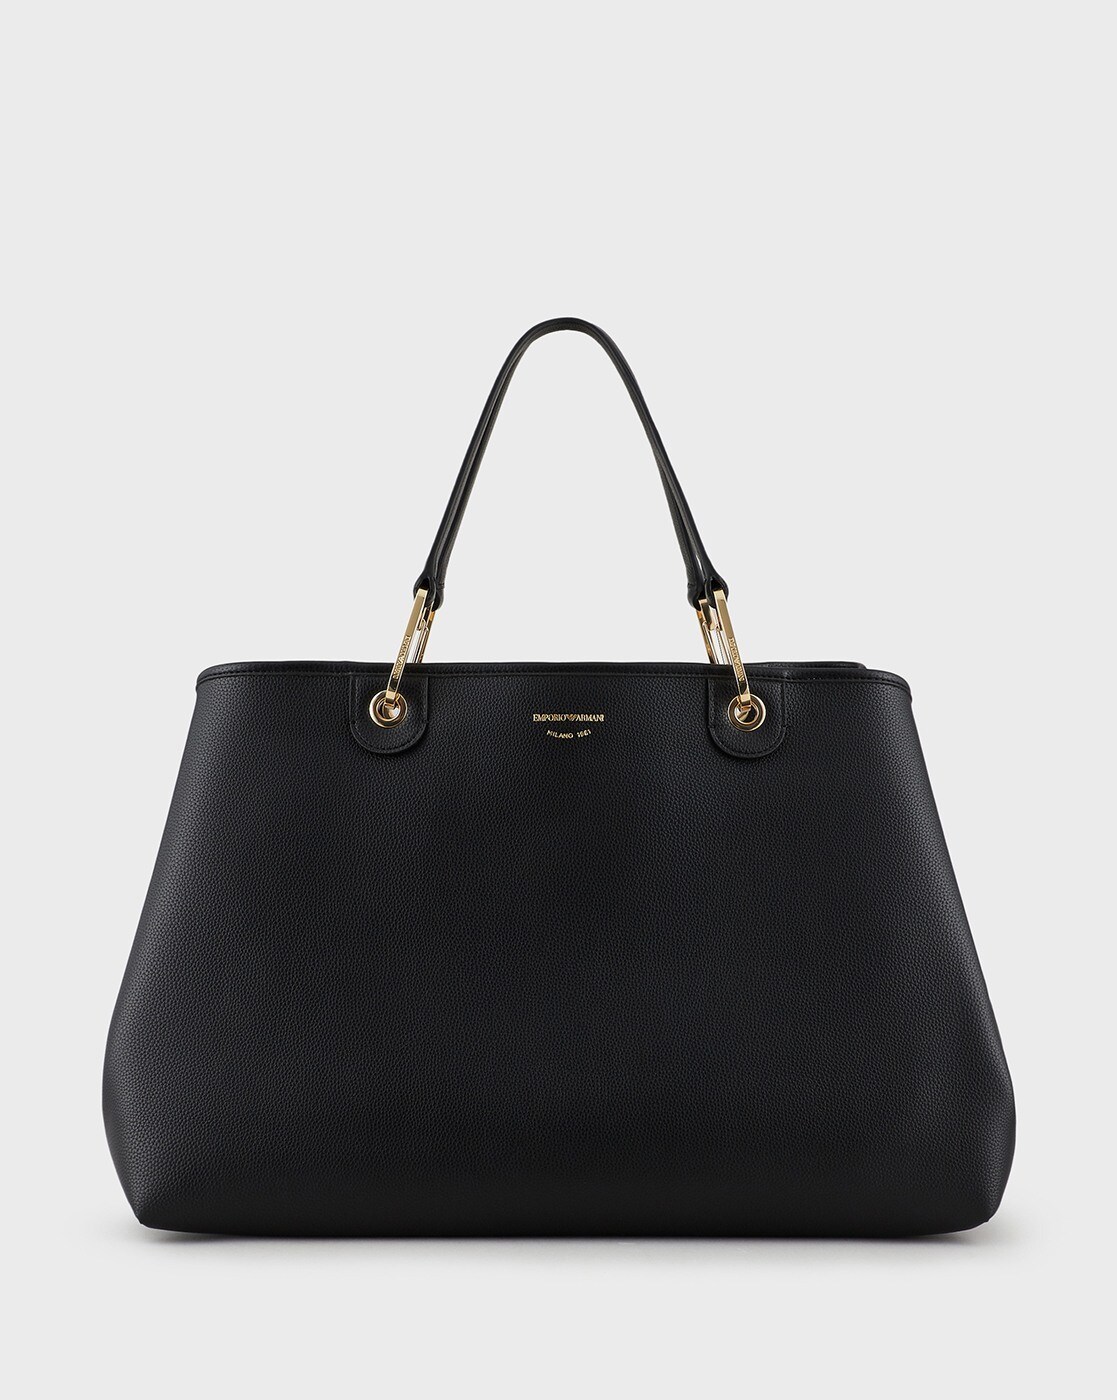 Large palmellato leather La Prima bag | GIORGIO ARMANI Woman | Bags,  Fashion bags, Bags designer fashion